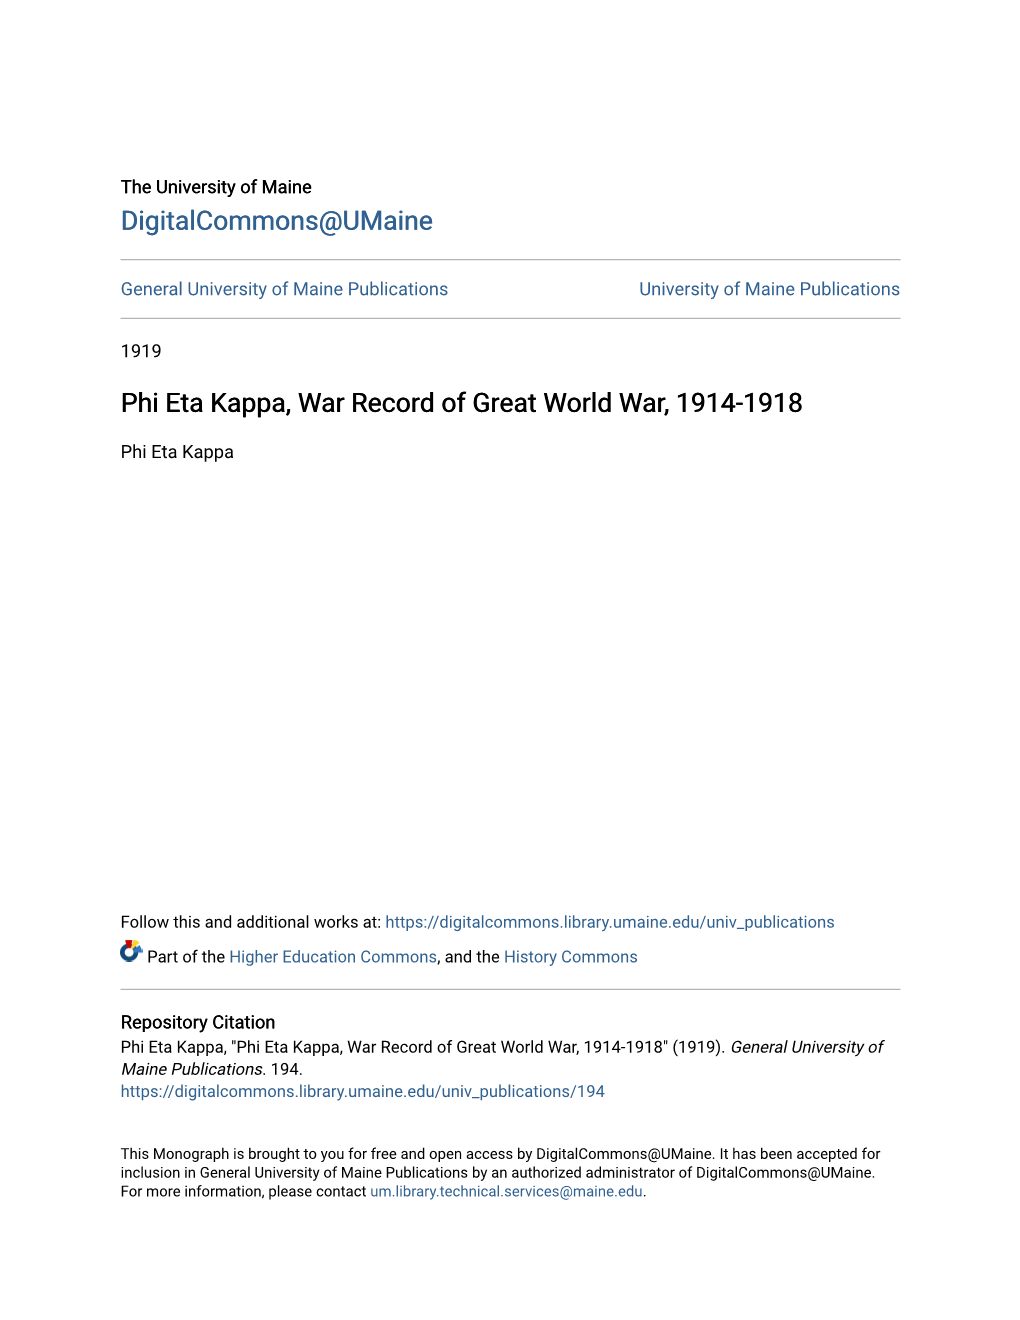 Phi Eta Kappa, War Record of Great World War, 1914-1918